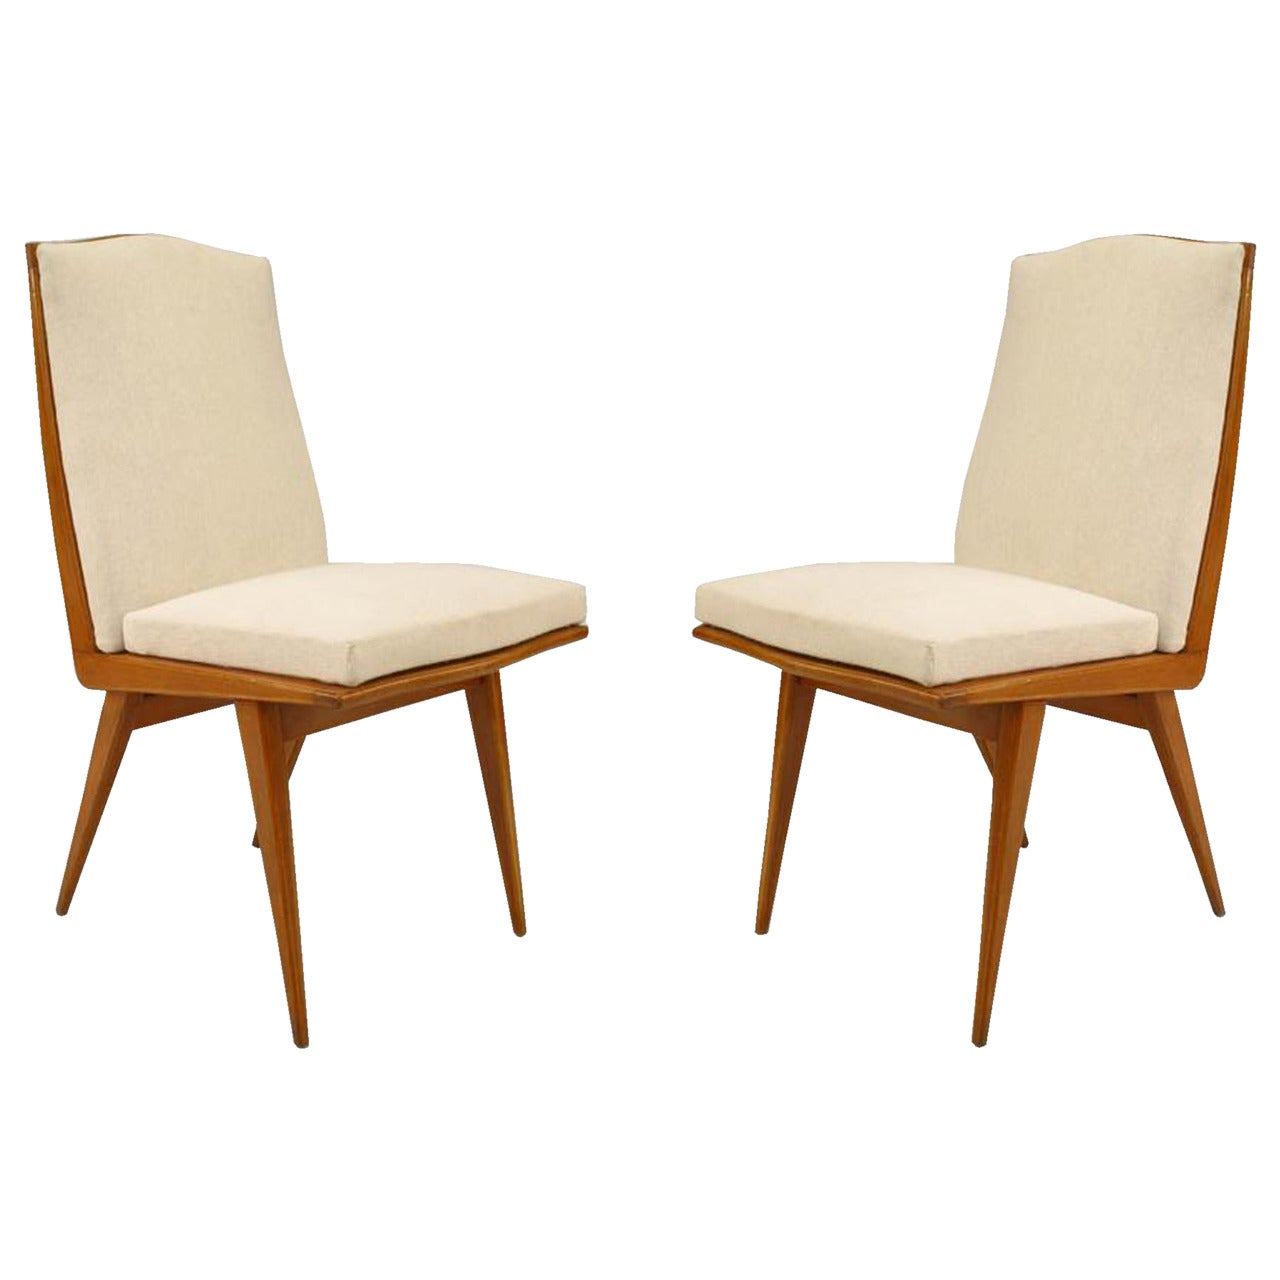 Pair of Italian Blond Mahogany Side Chairs